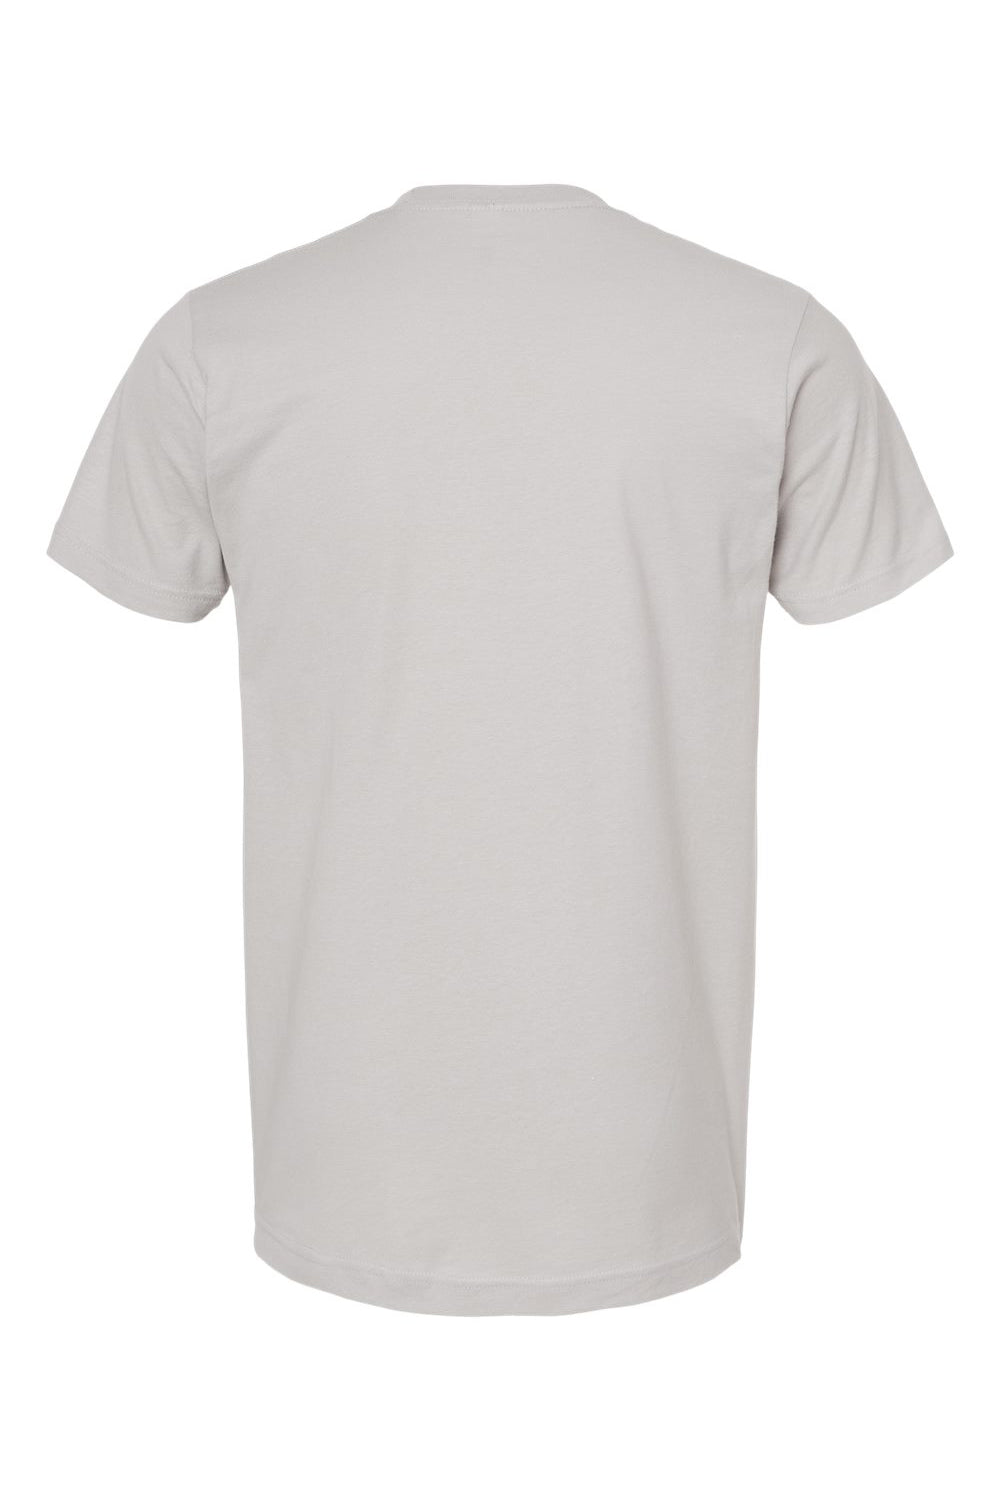 Tultex 202 Mens Fine Jersey Short Sleeve Crewneck T-Shirt Silver Grey Flat Back